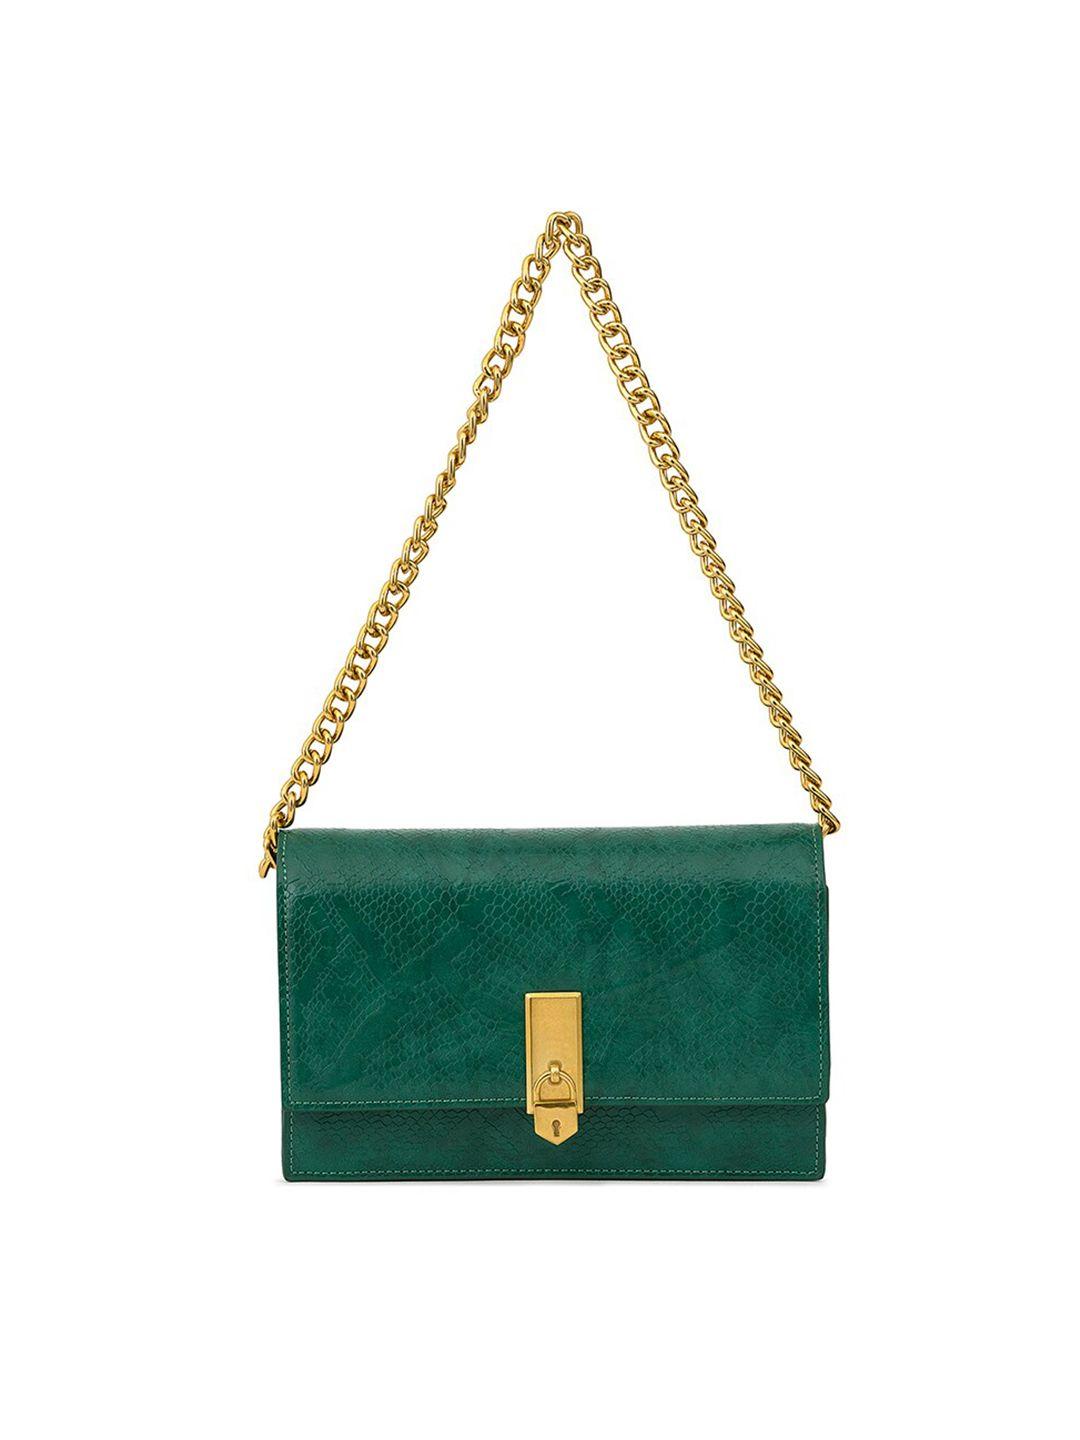 MIRAGGIO Green Gold-Toned Textured Envelope Clutch